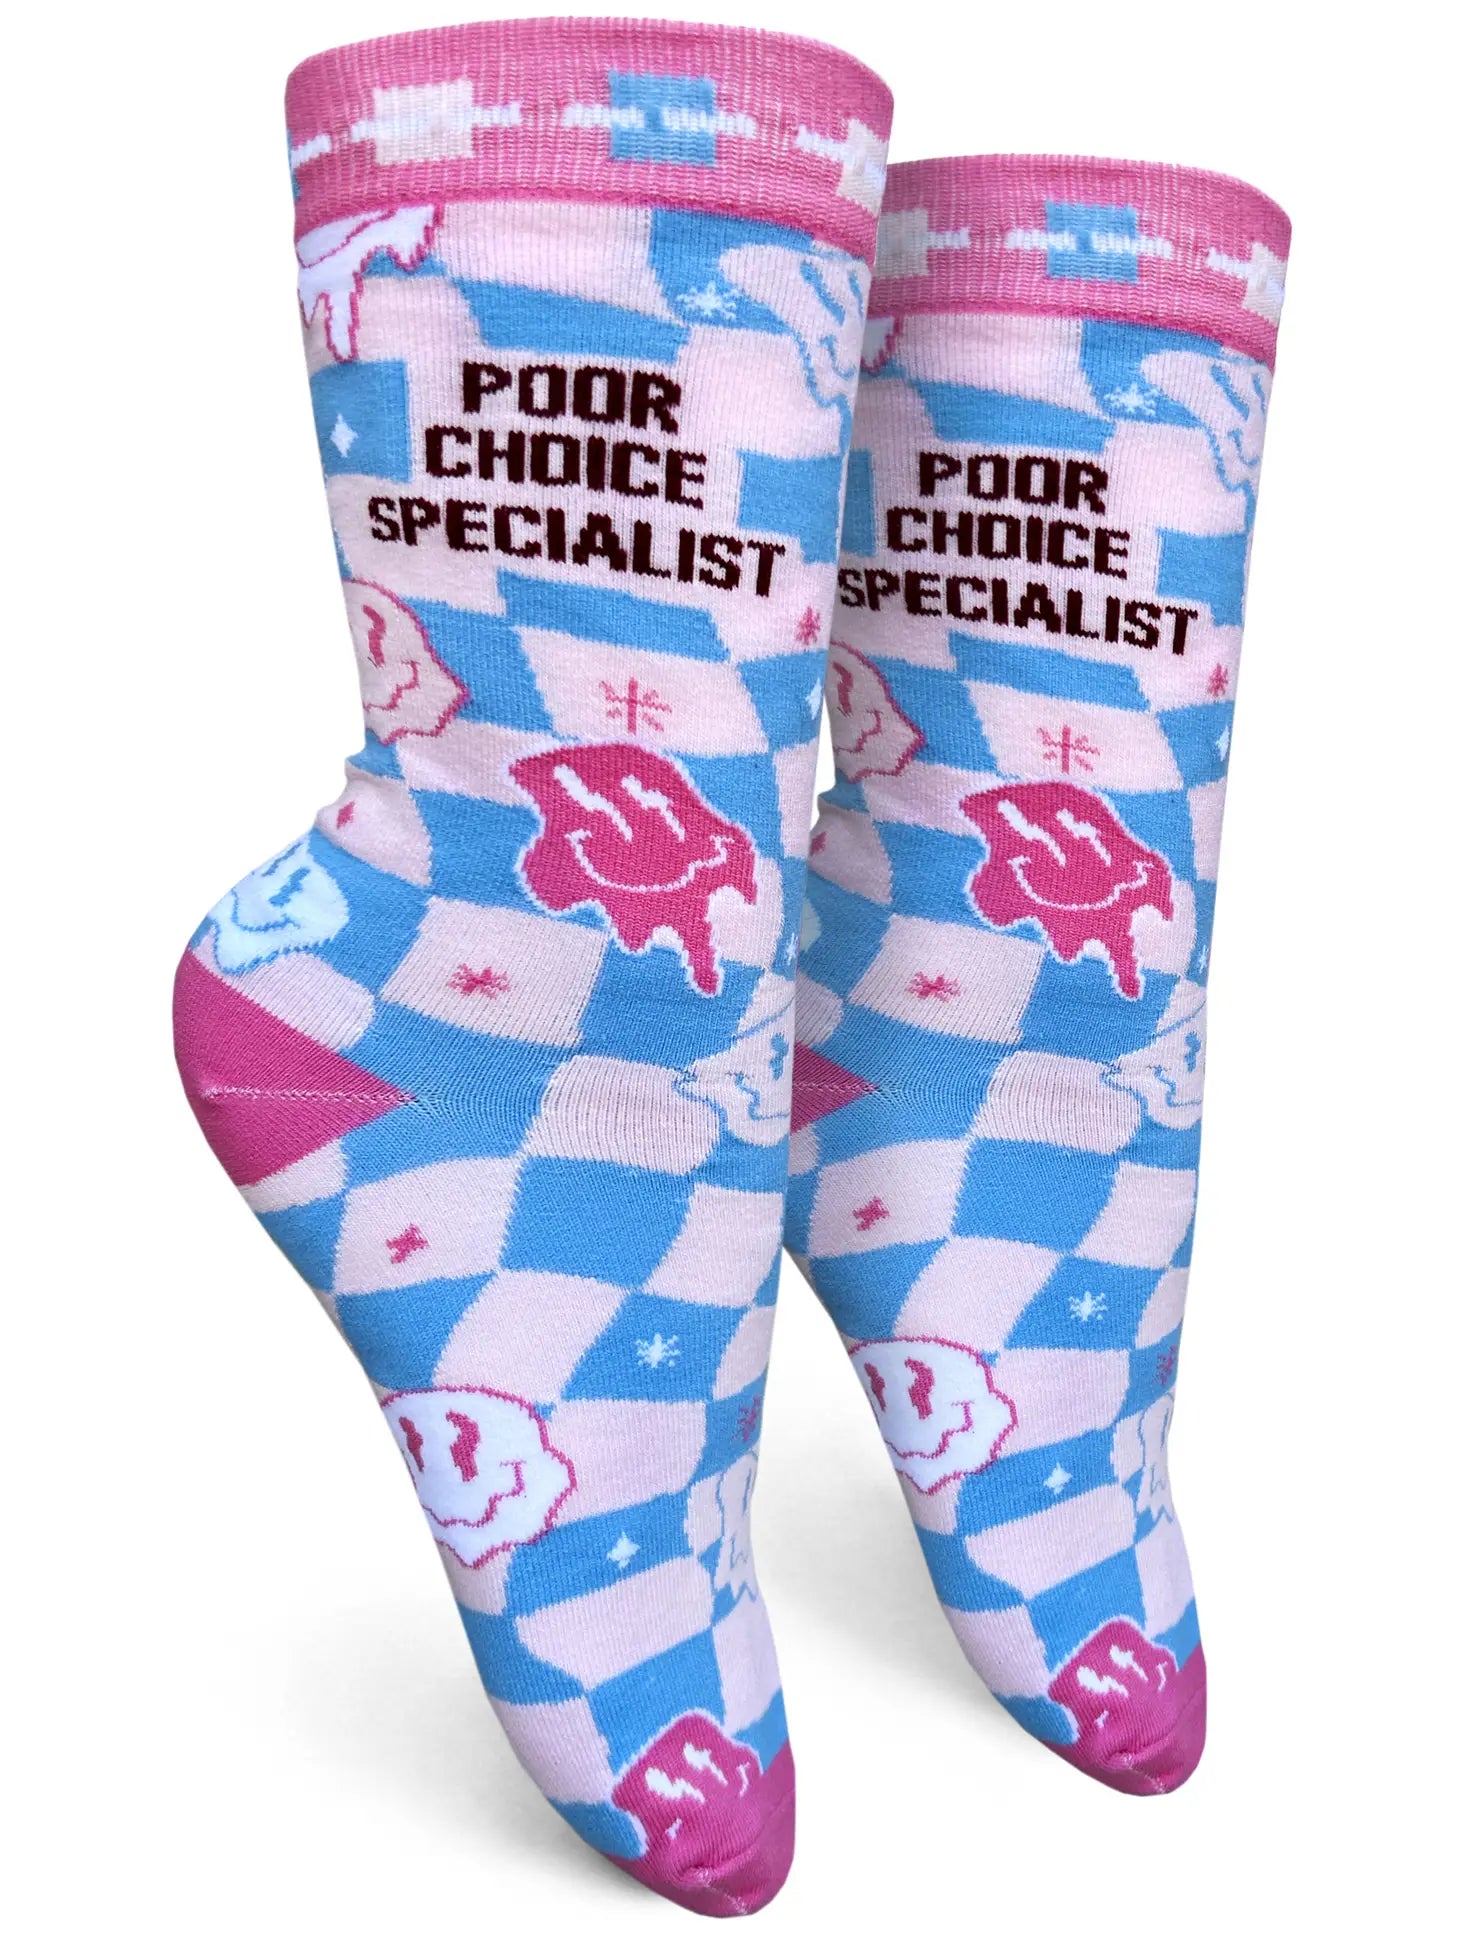 Poor Choice Specialist Socks